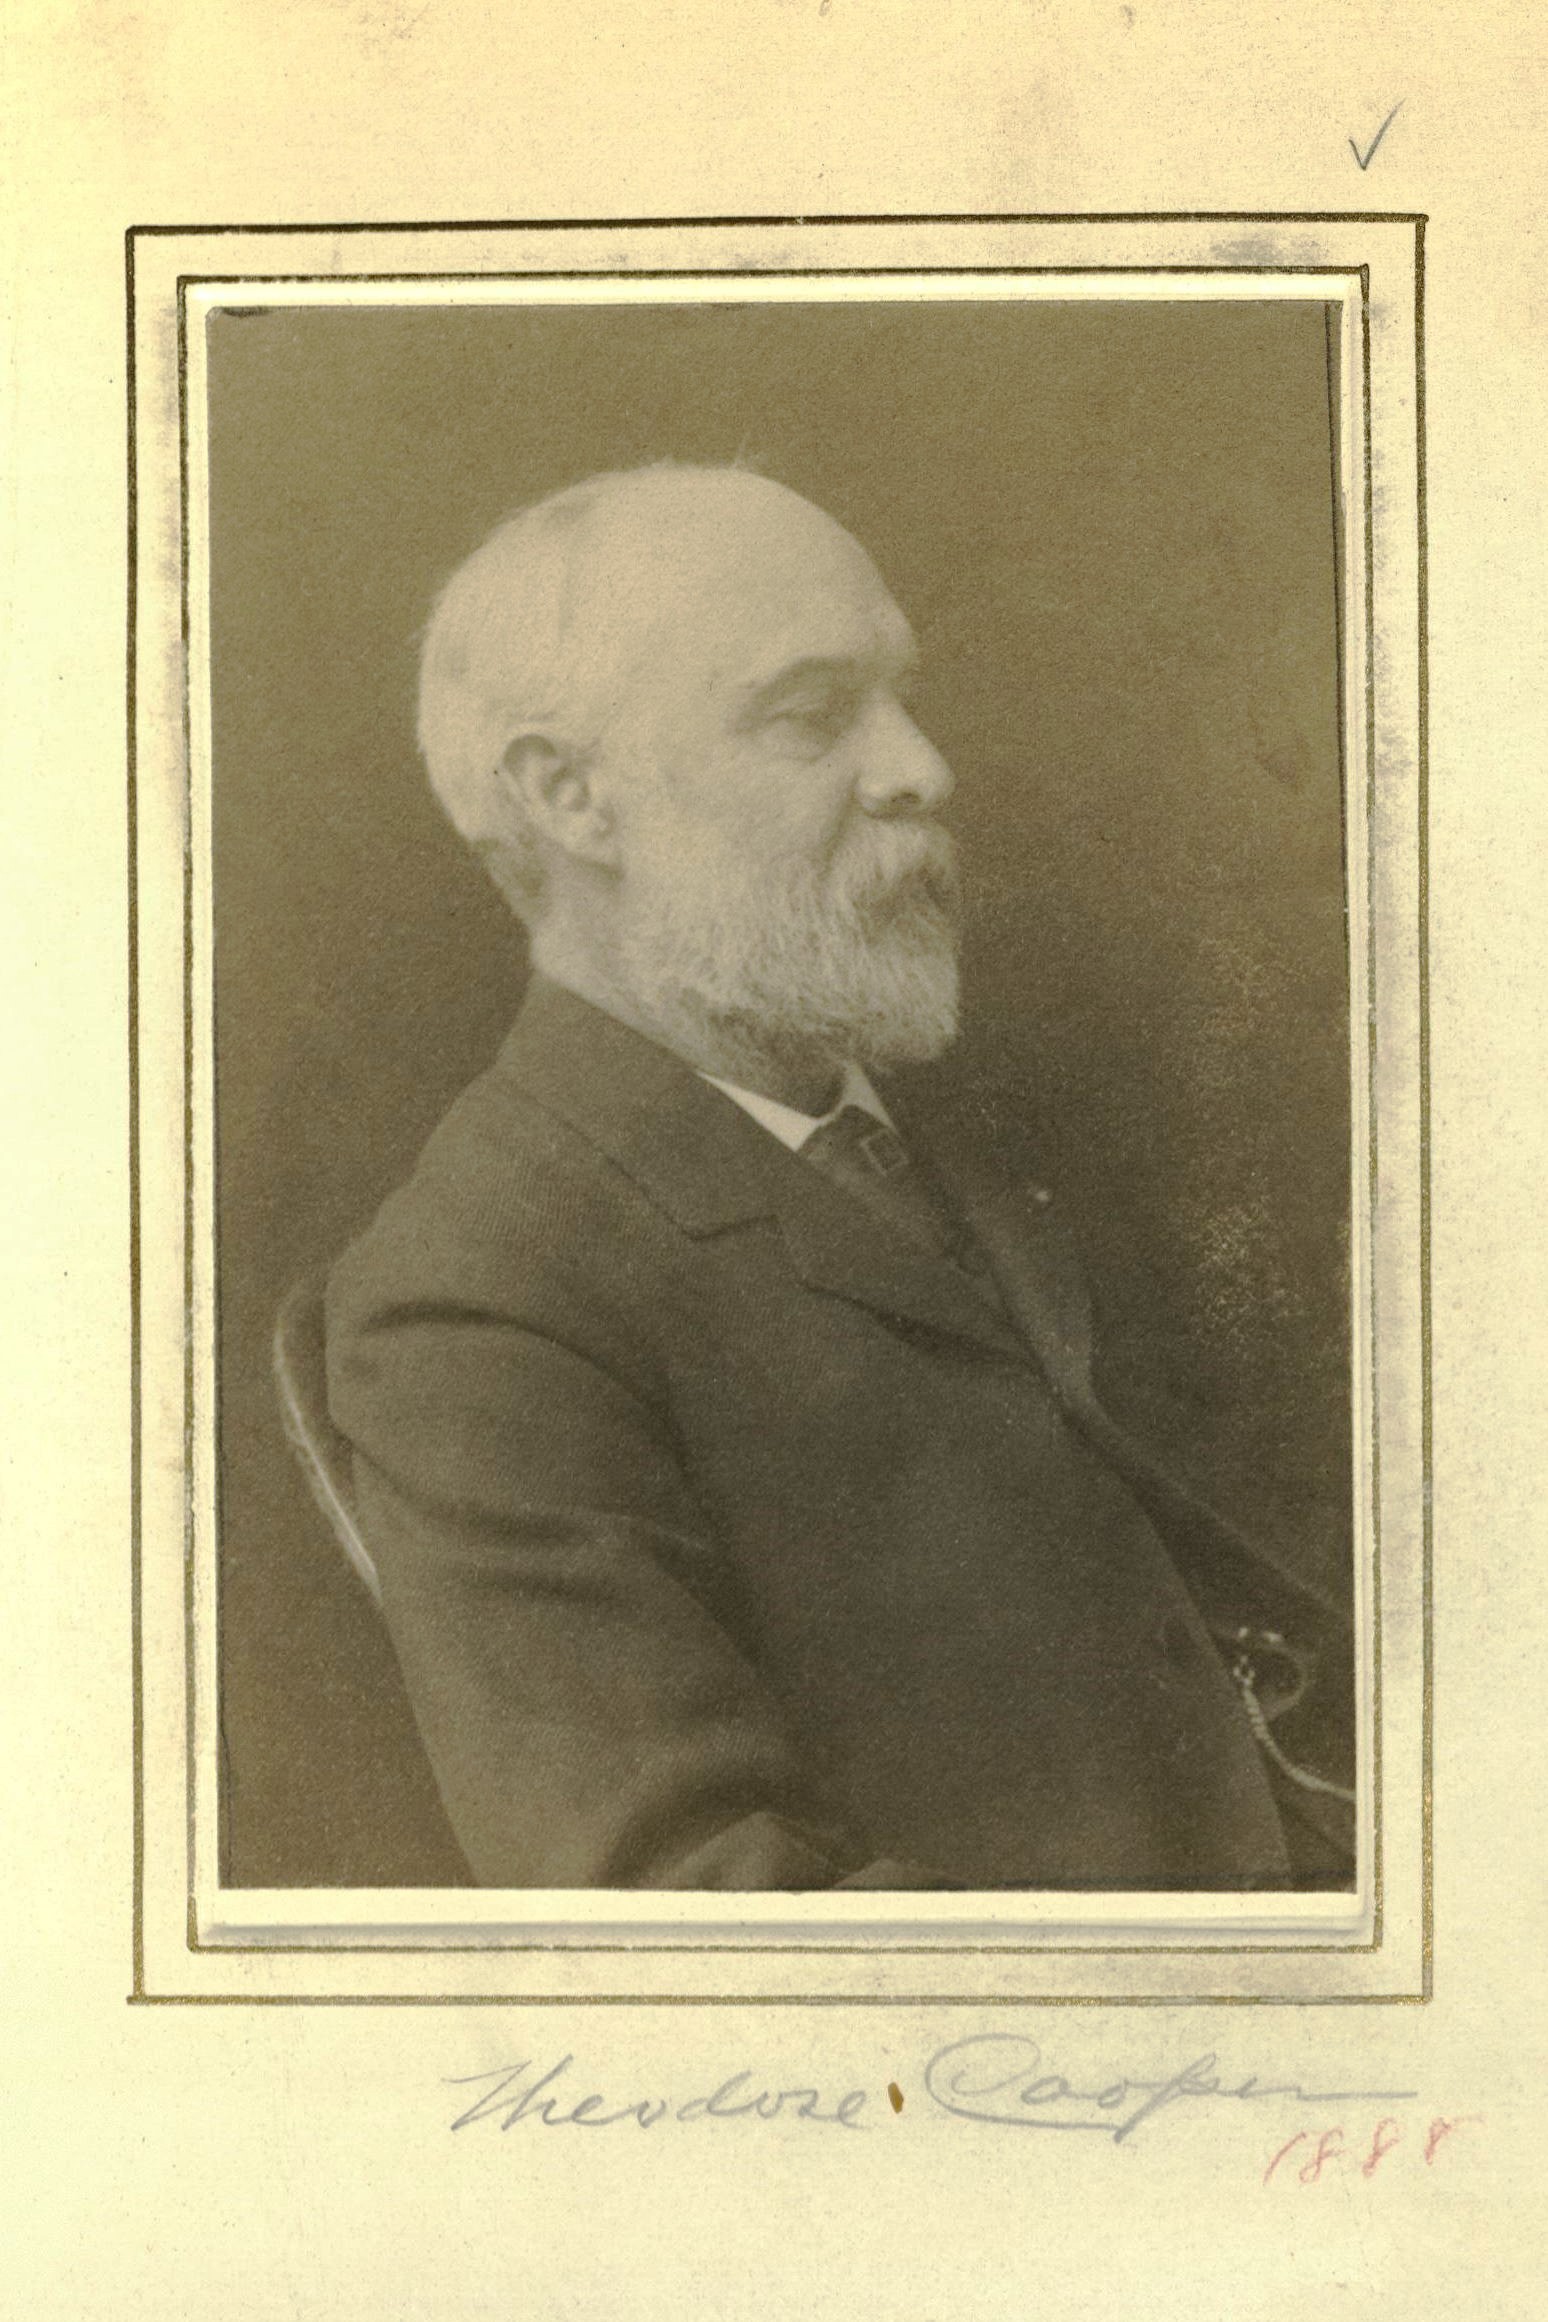 Member portrait of Theodore Cooper